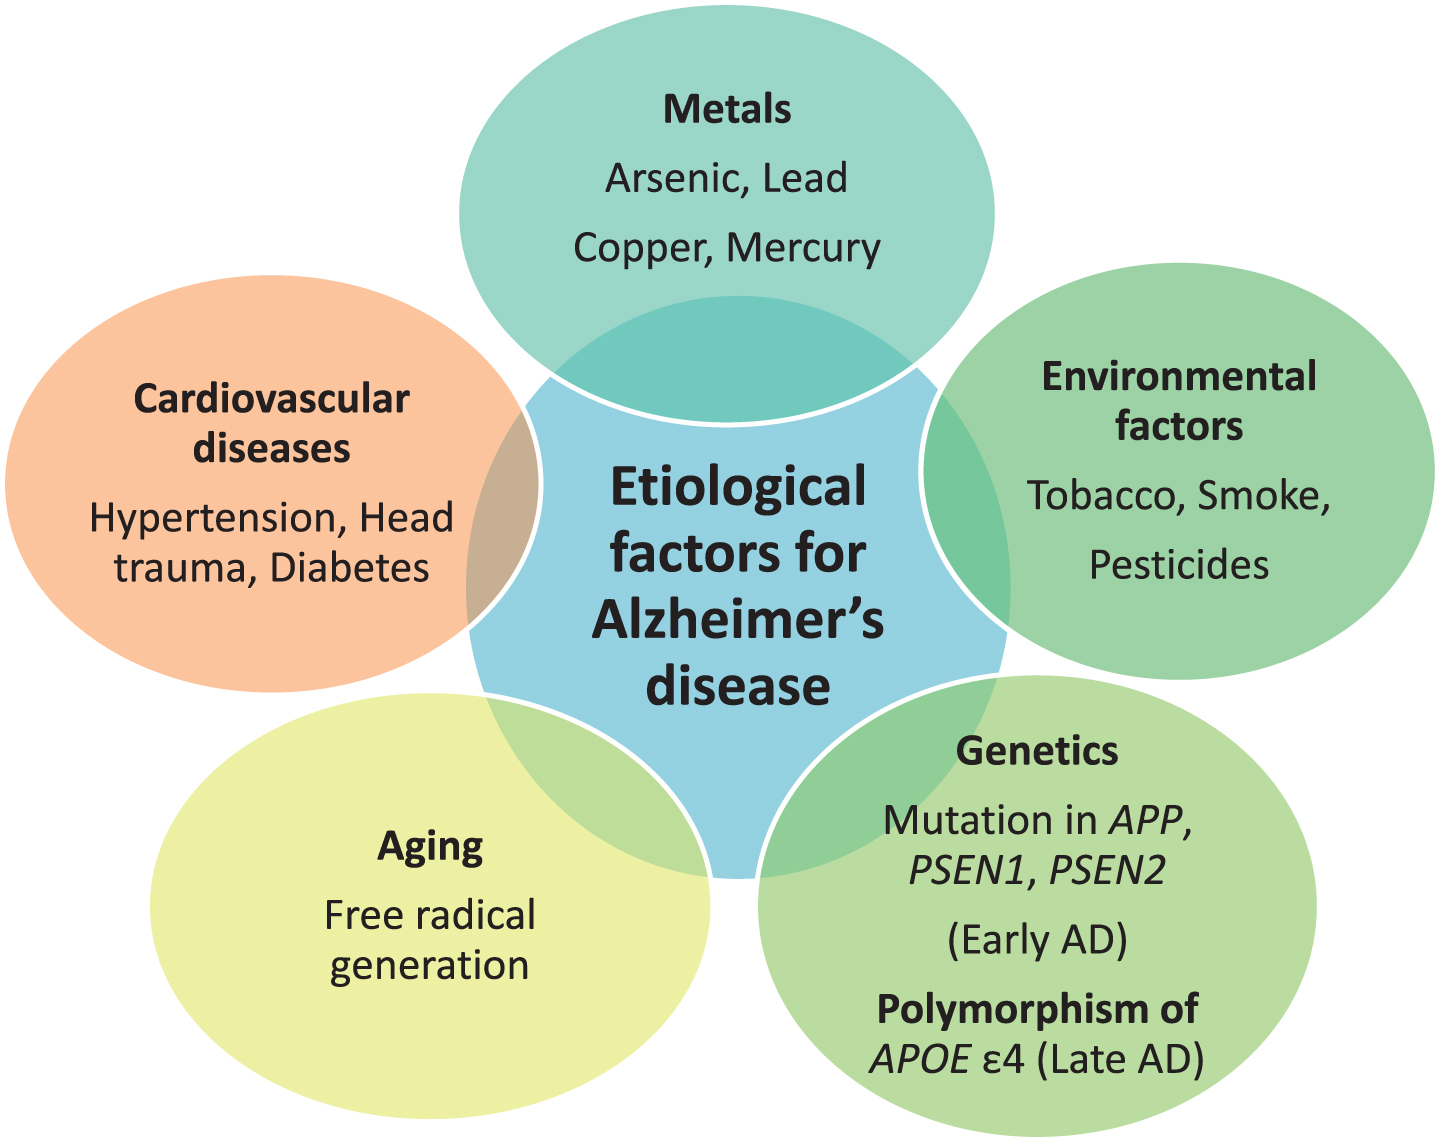 Etiological factors responsible for Alzheimer’s disease (AD).